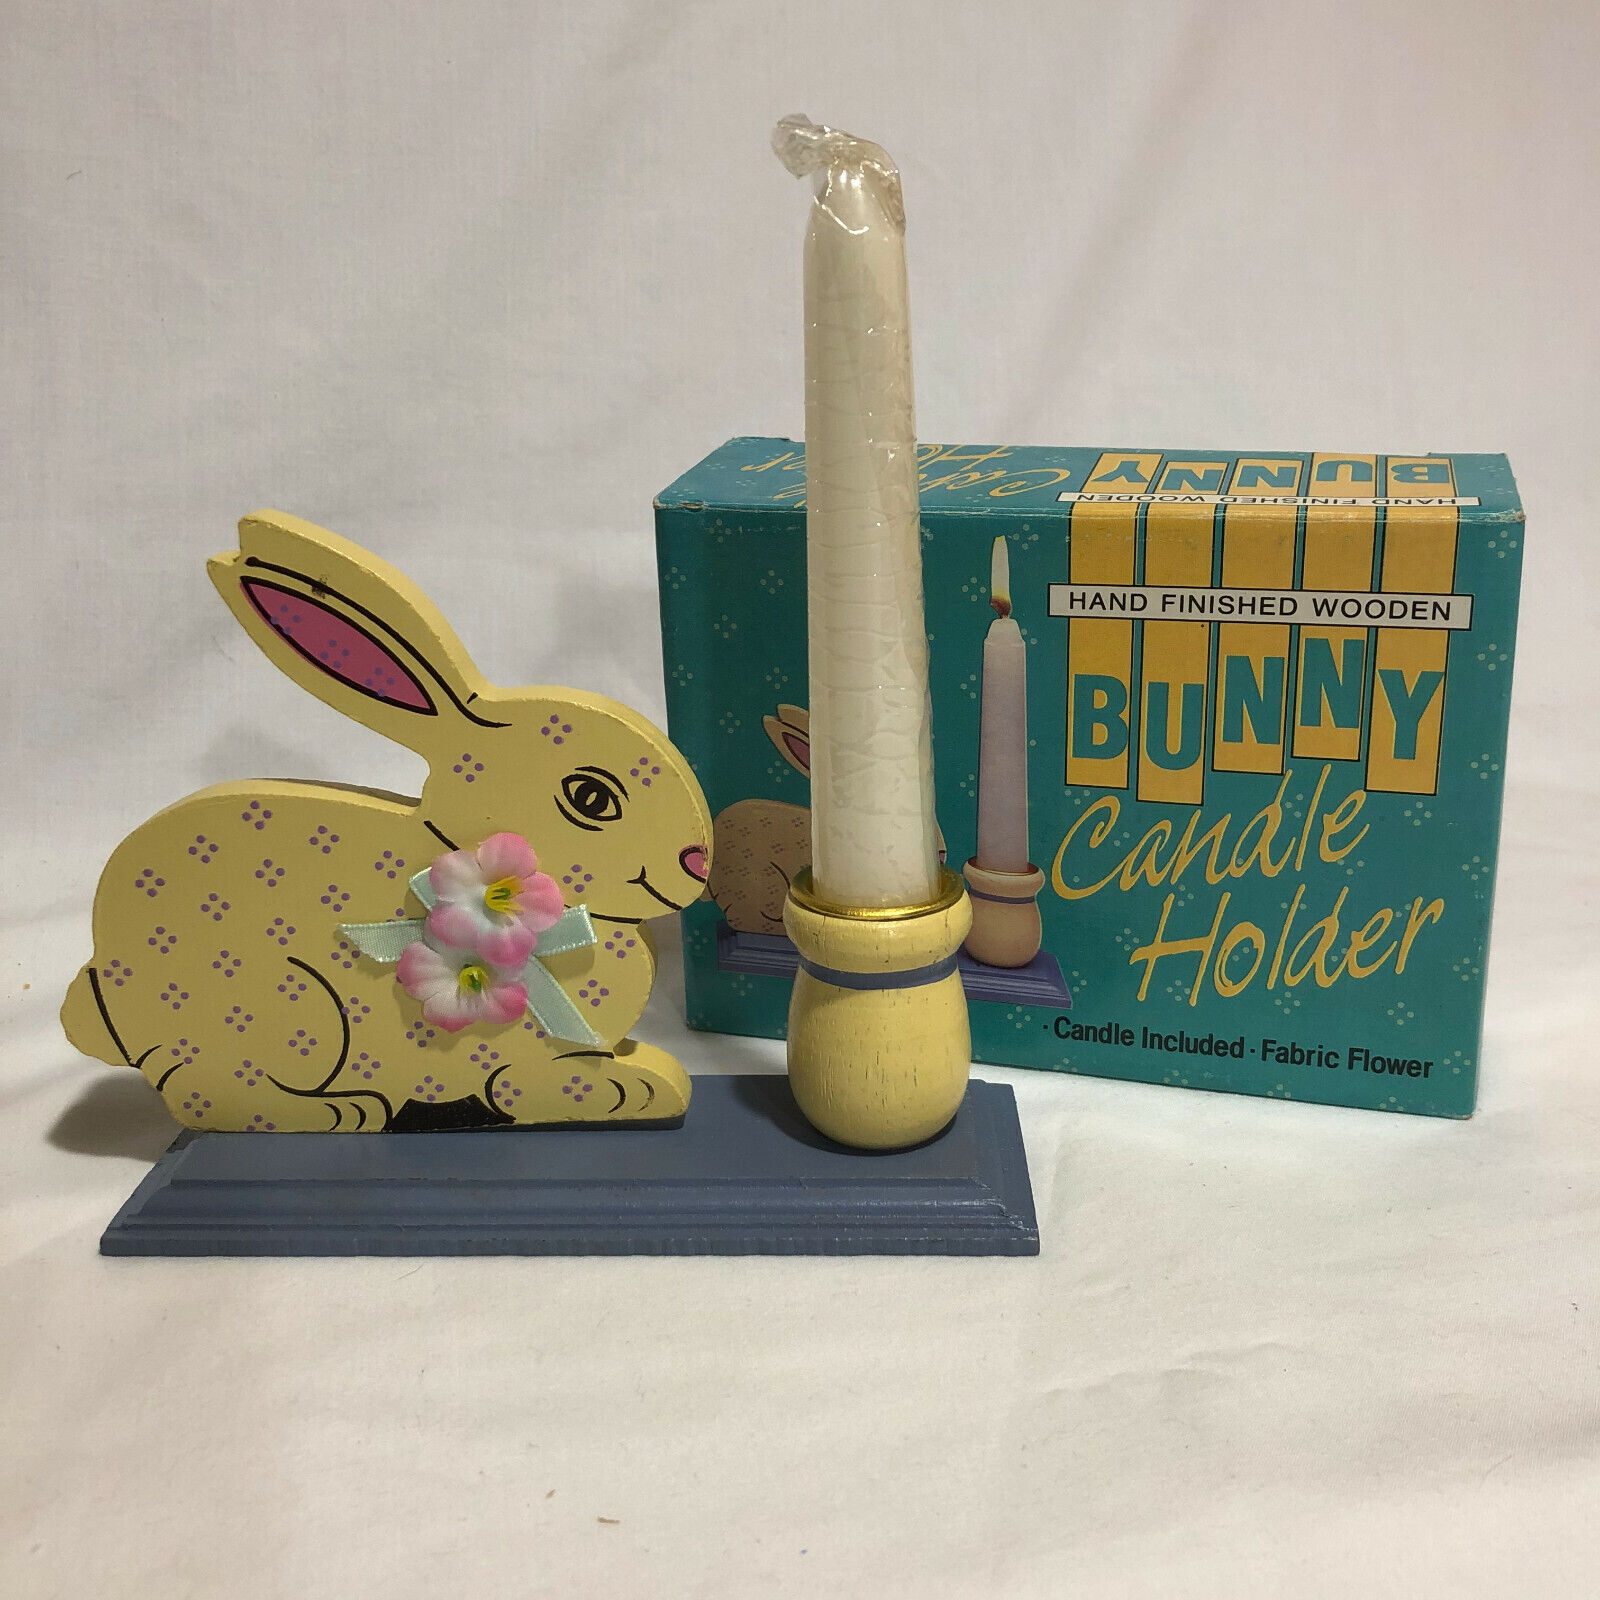 Vintage Wooden Easter Bunny Candleholder In Original Box- Adorable